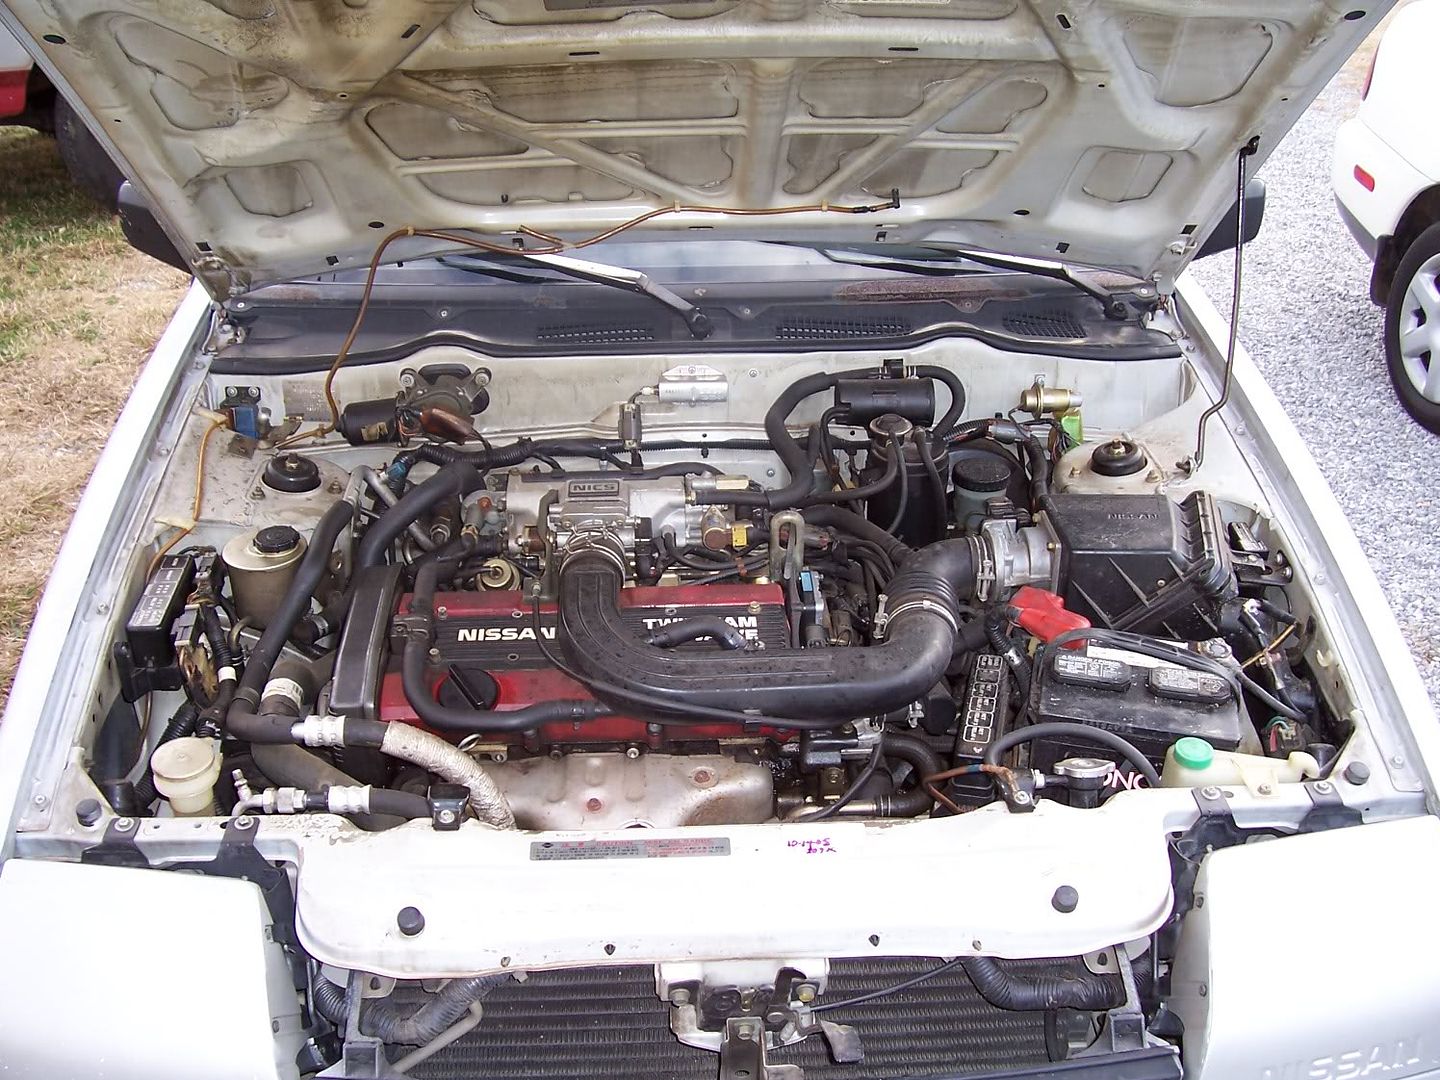 Nissan pulsar engine rebuild #6